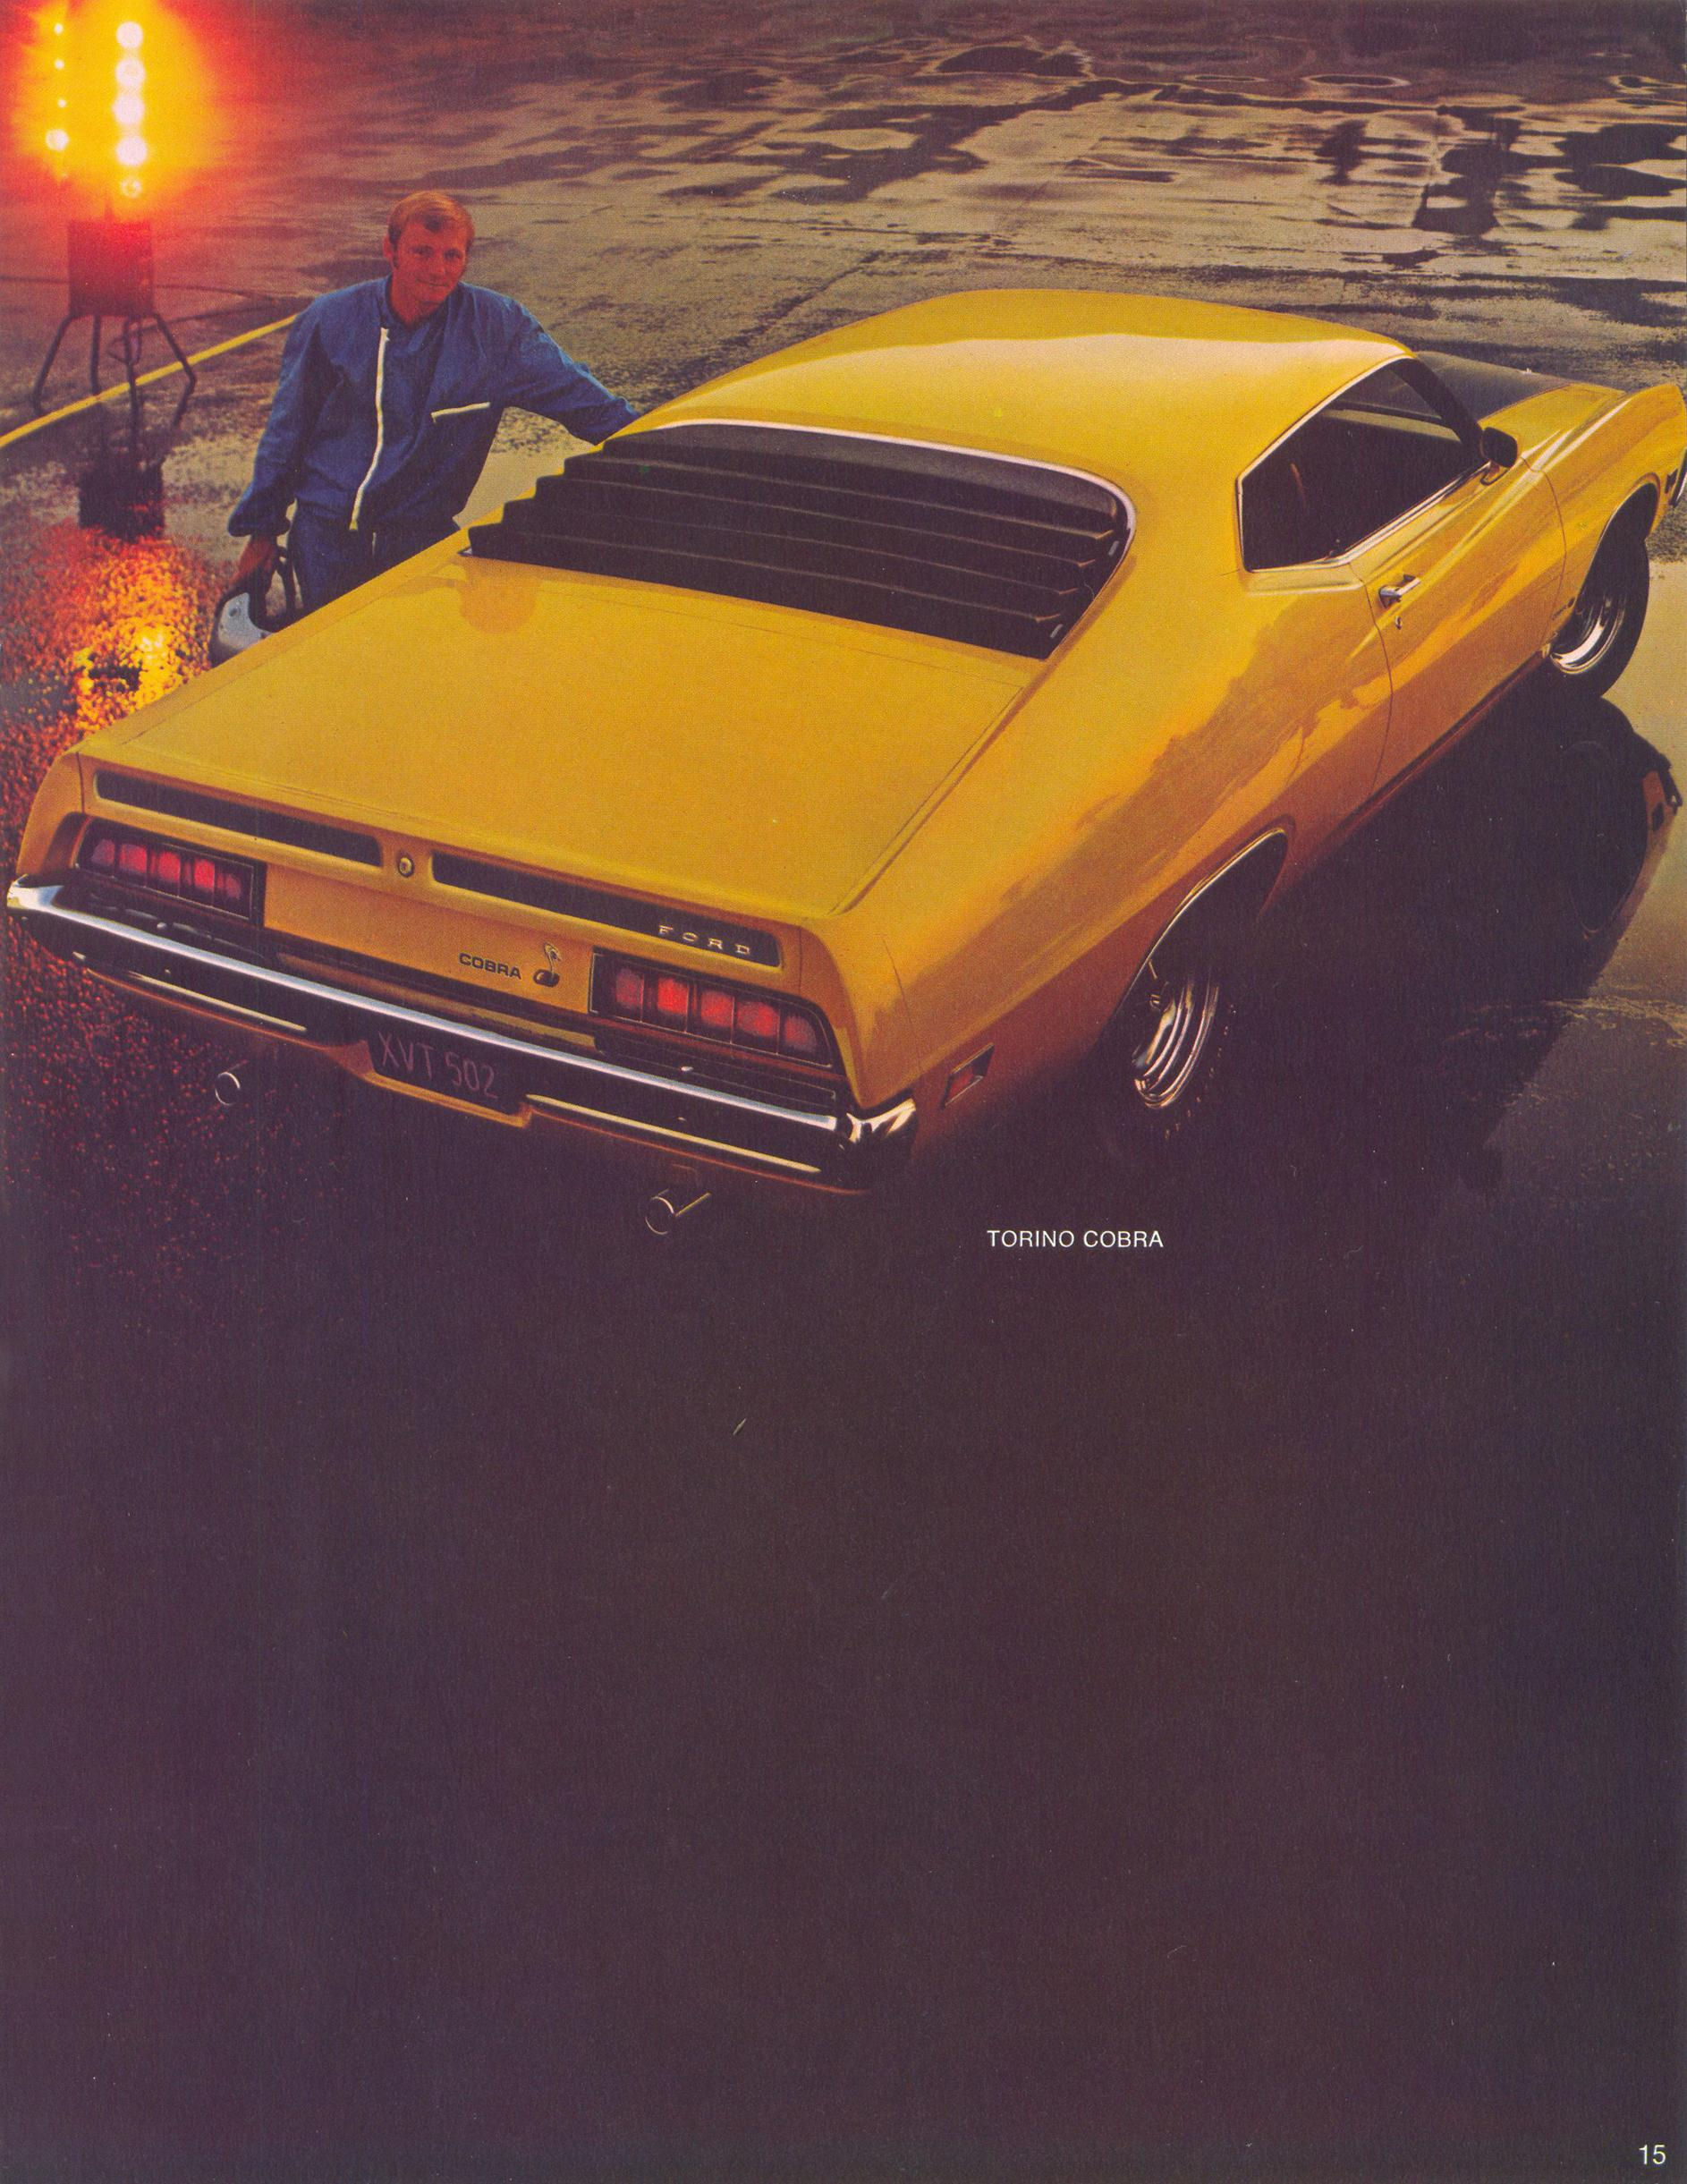 1970 Ford torino sales brochure